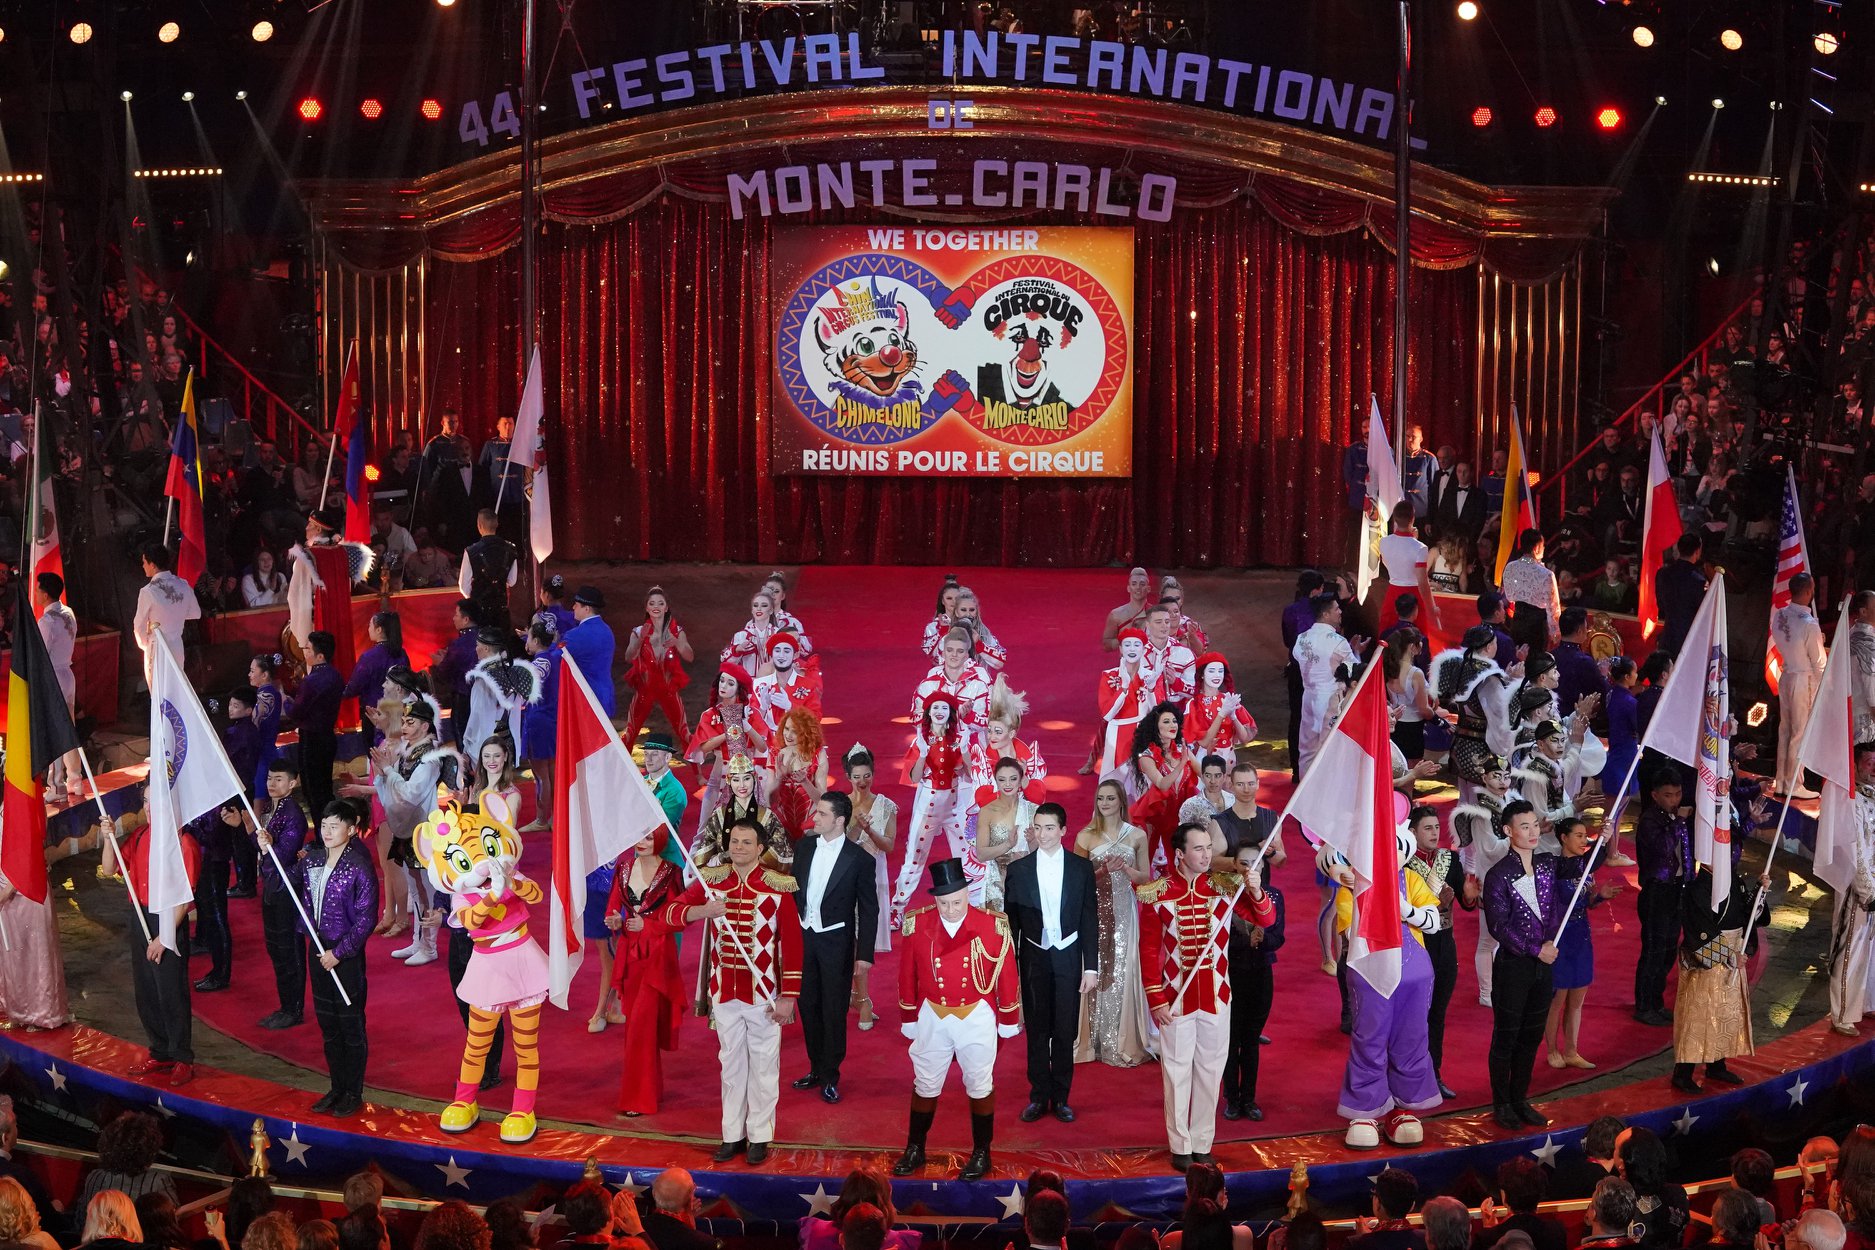 Monte-Carlo International Circus Festival